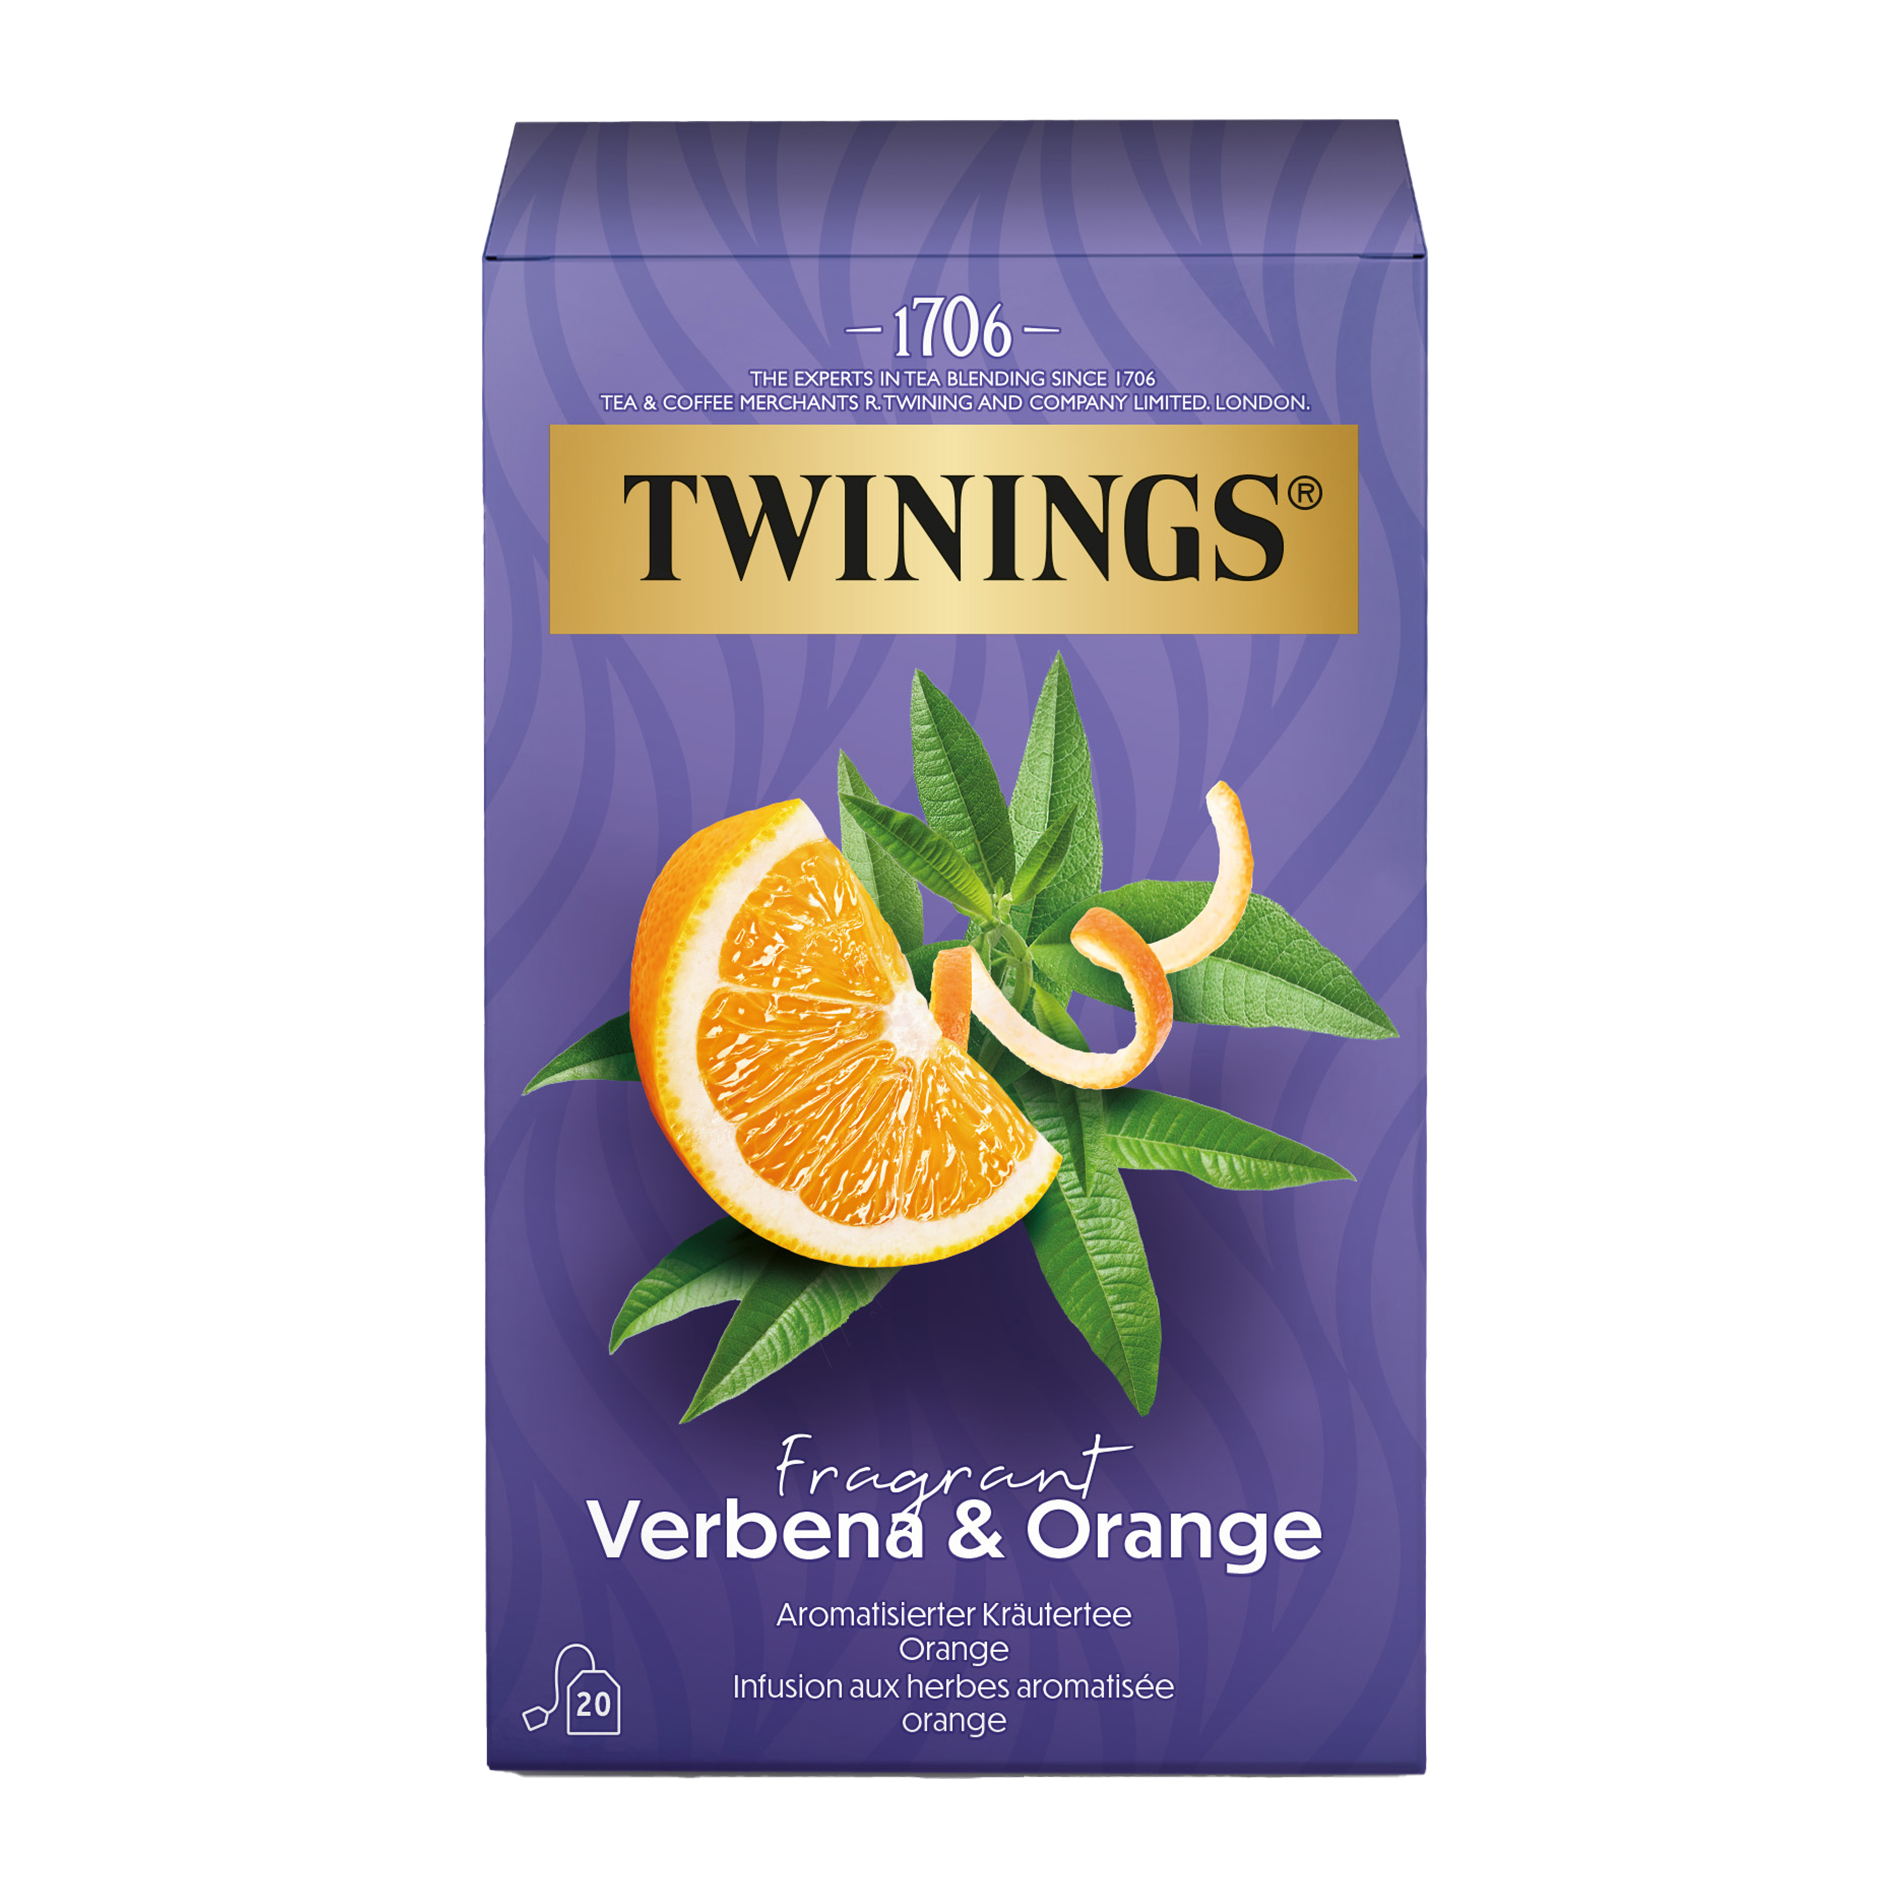 Twinings Fragrant Verveine & Orange 20 x 1.5 g